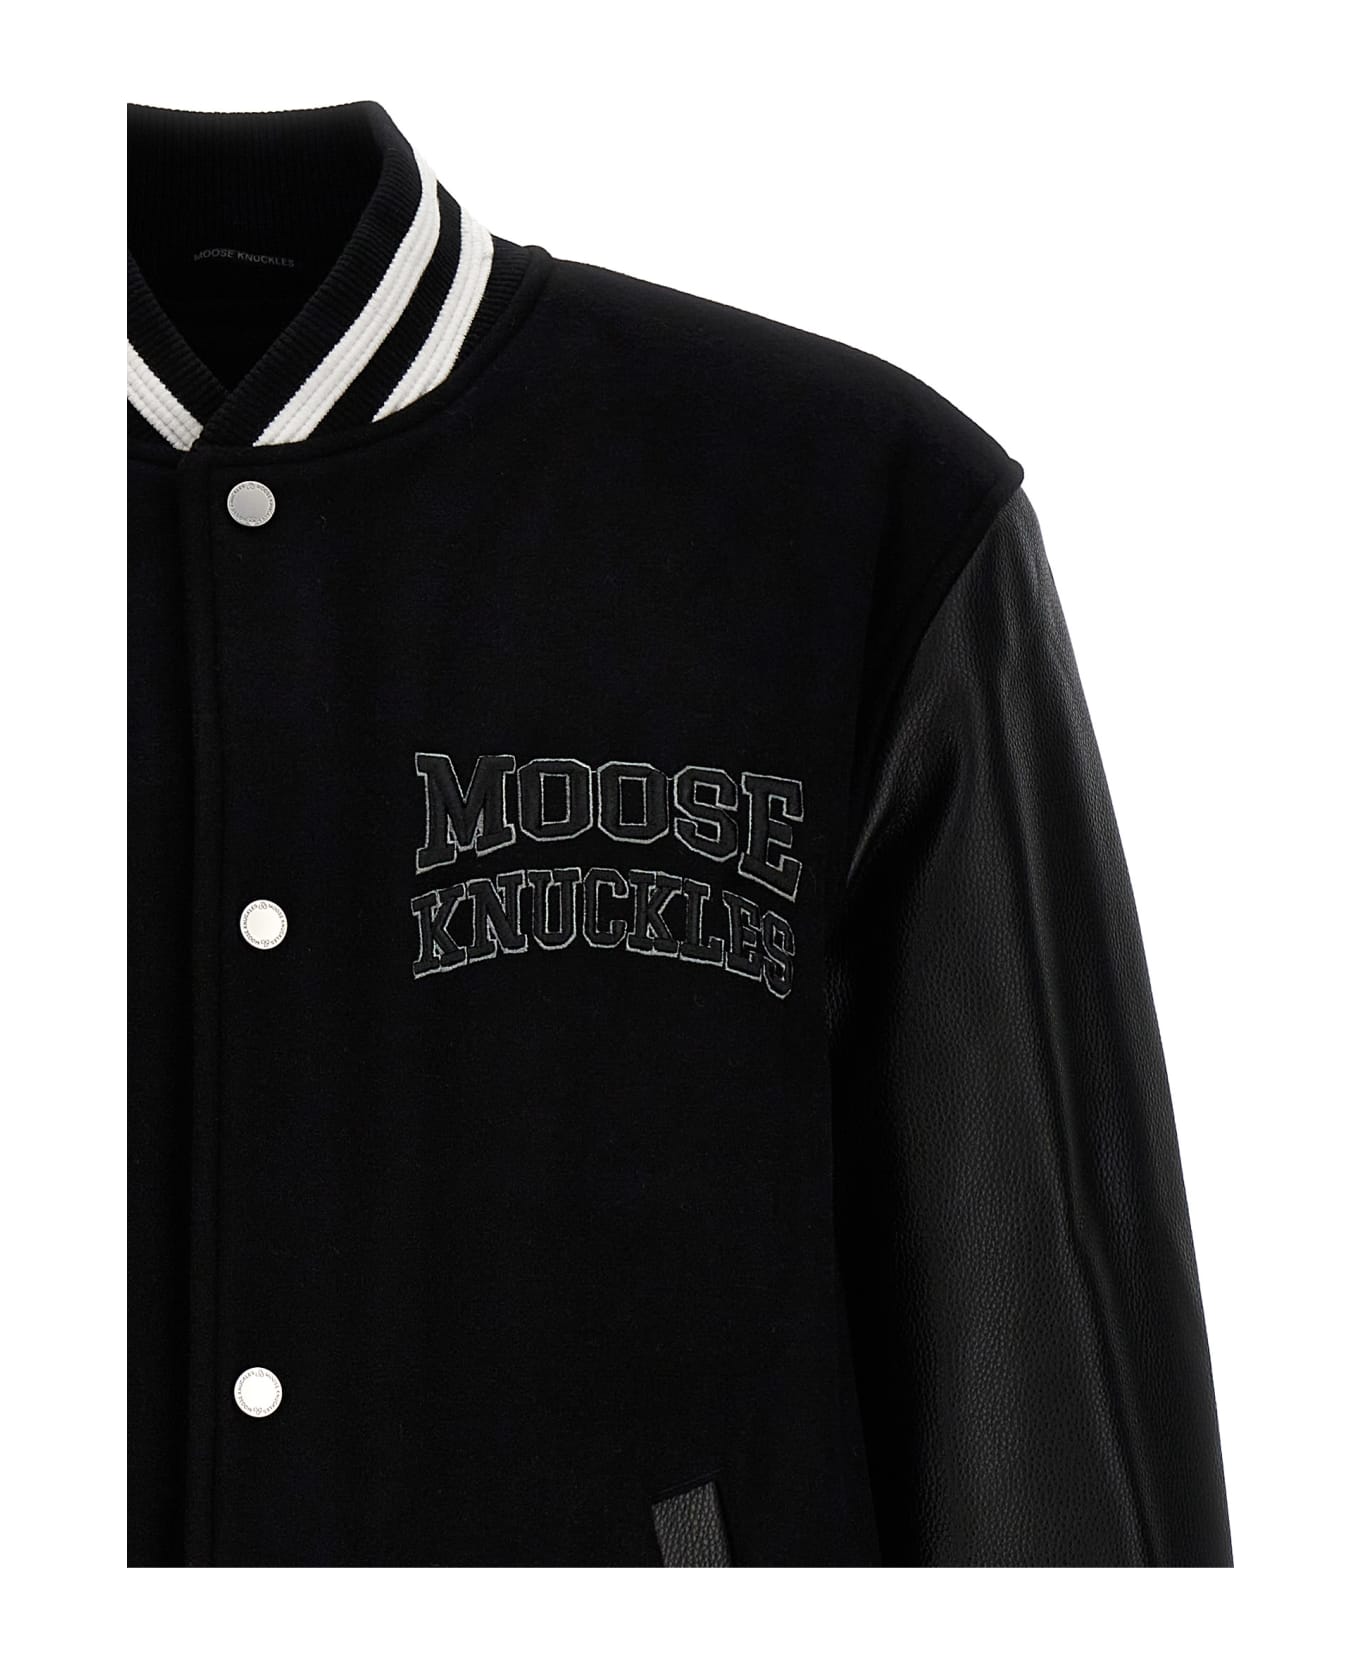 Moose Knuckles 'varsity' Bomber Jacket